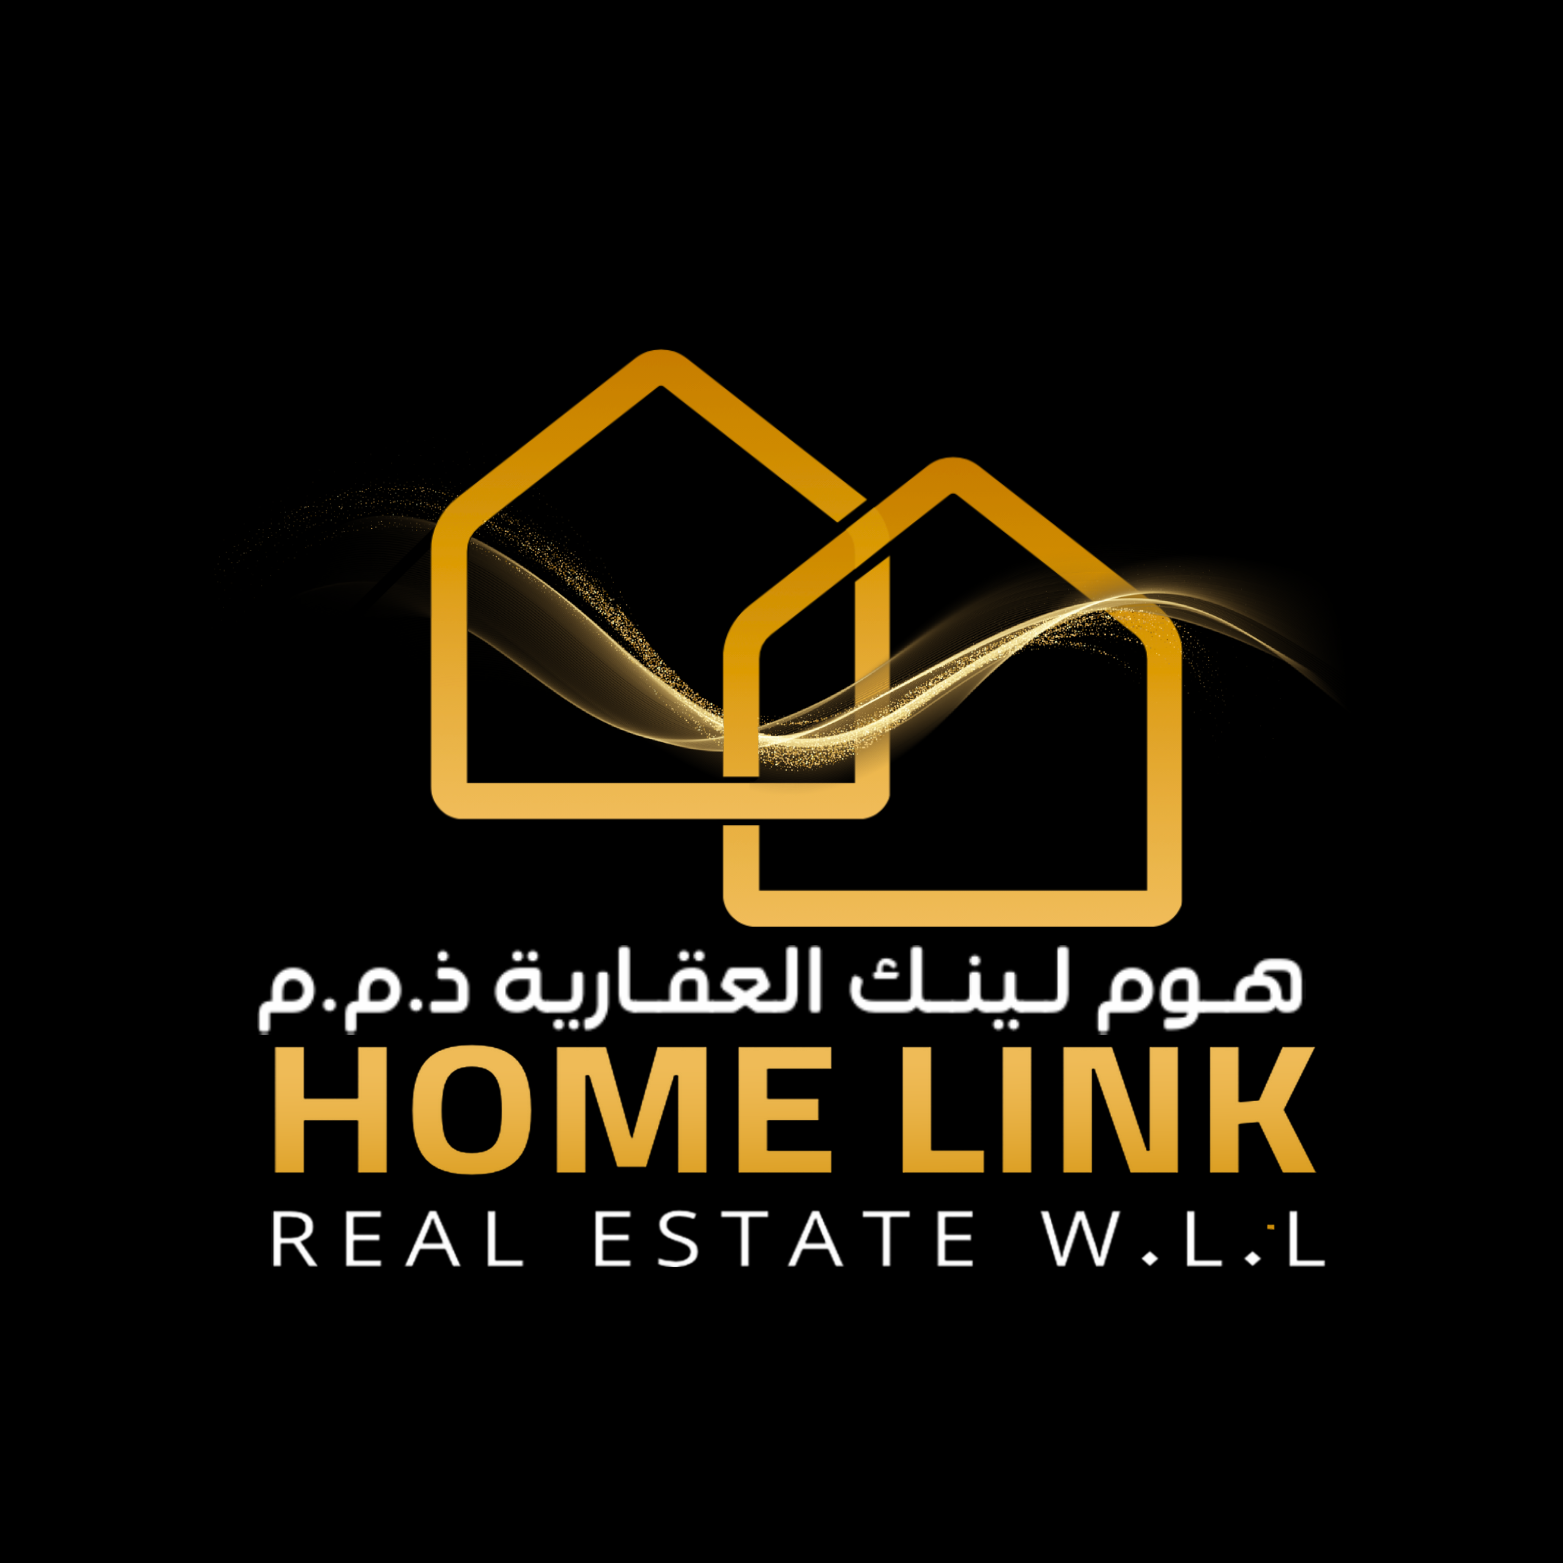 RZ Home Link Real Estate W.L.L